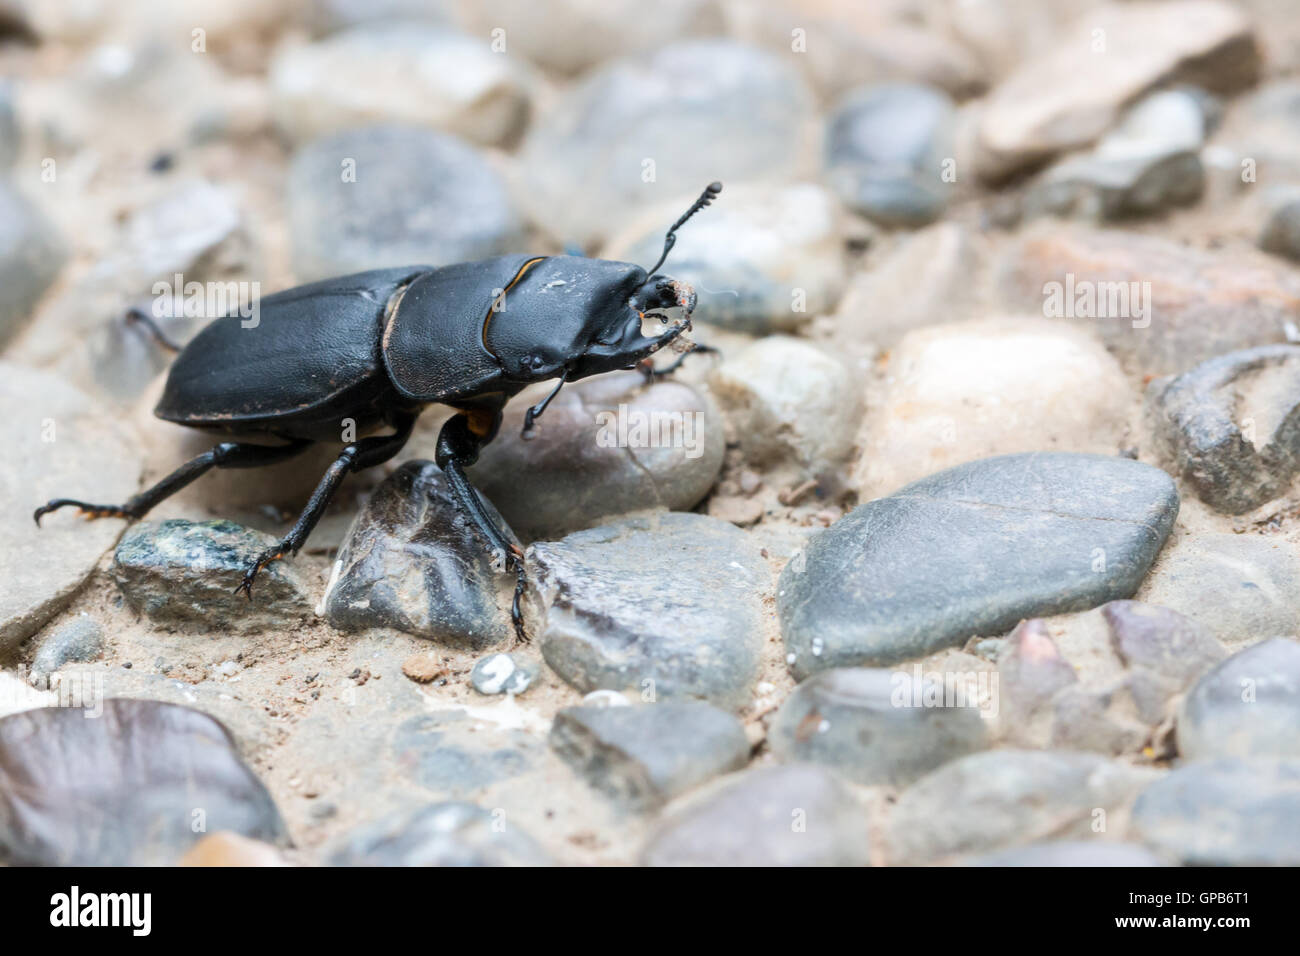 Black bark beetle found on the sidewalk Stock Photo